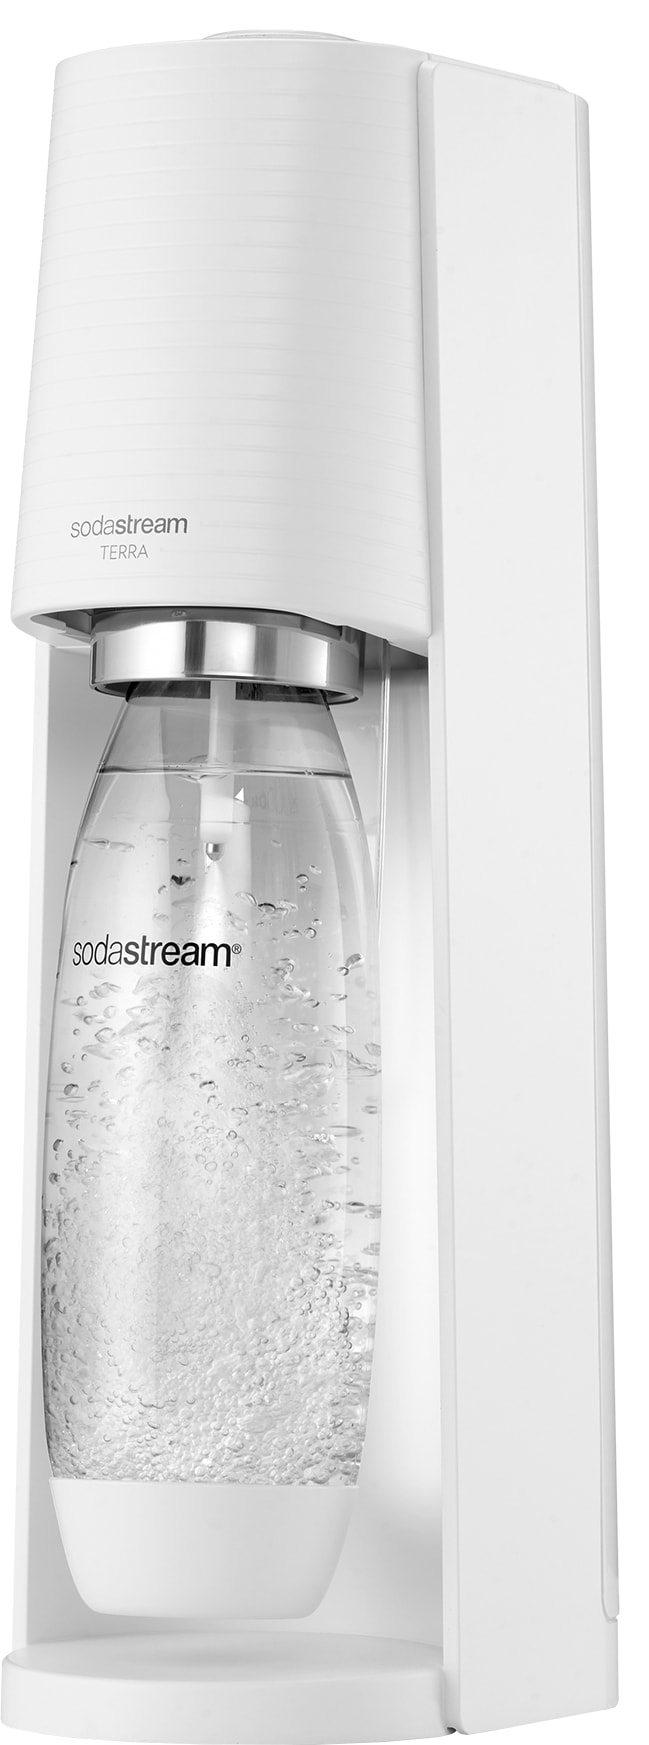 SodaStream Terra kolsyremaskin SS1012801770 (vit)